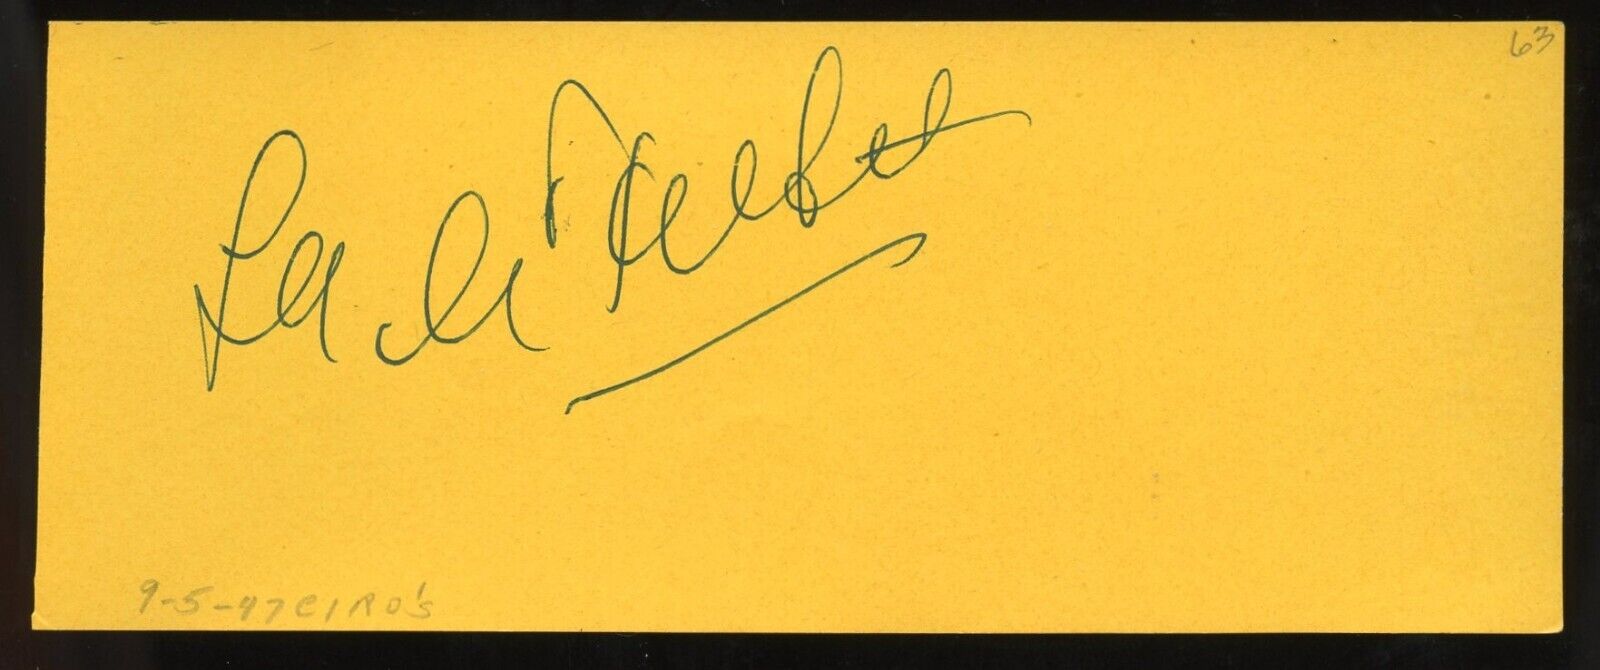 Lyle Talbot d1996 signed 2x5 cut autograph on 9-5-47 at Ciro\'s Night Club LA